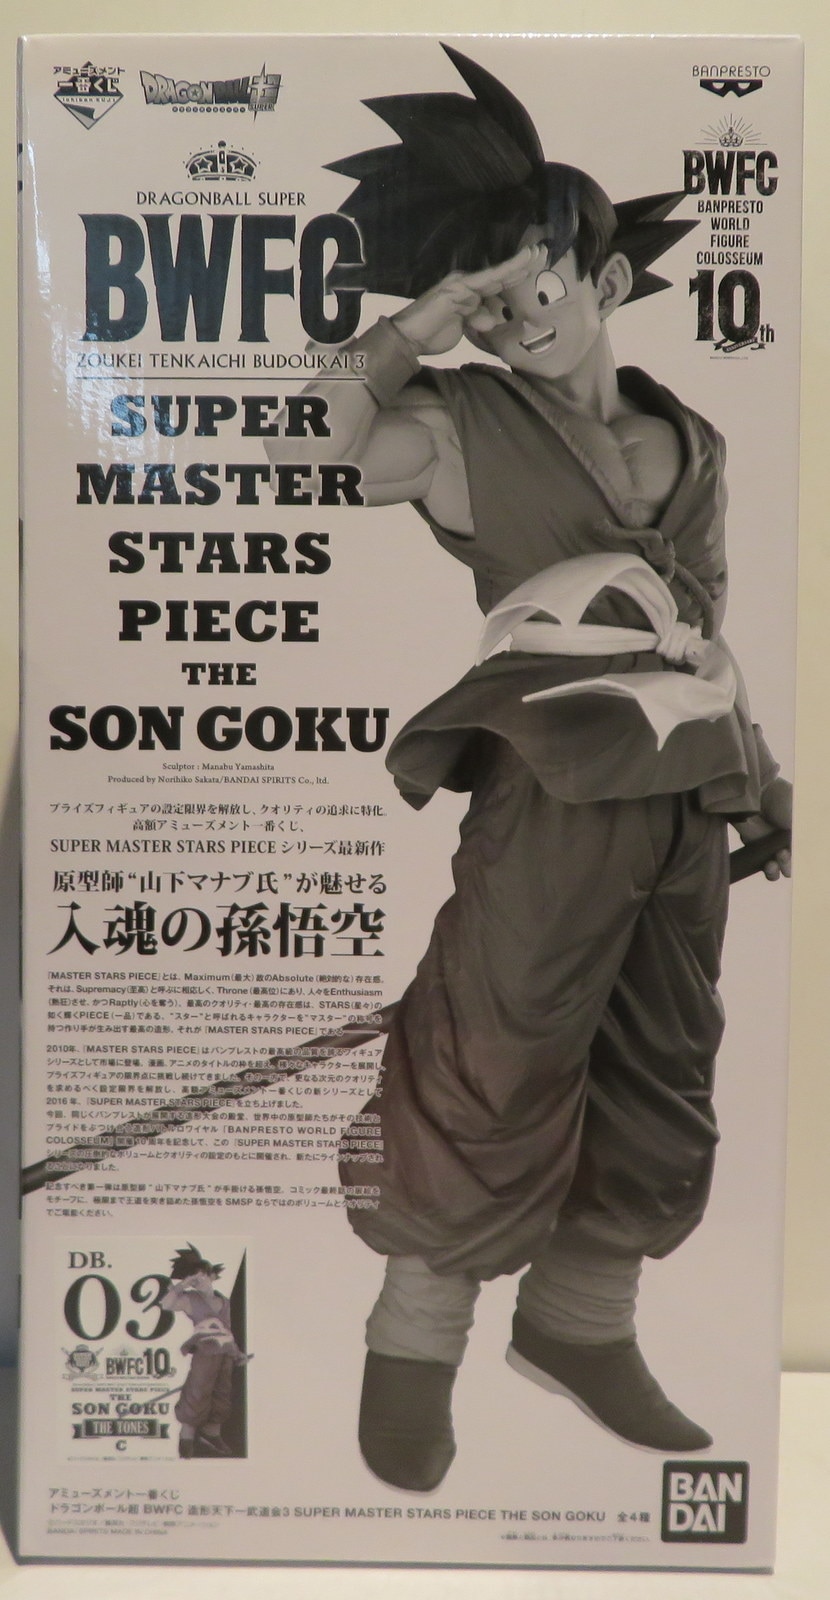 Ichiban Kuji Dragon Ball Super BWFC Tenkaichi Budokai 3 SUPER